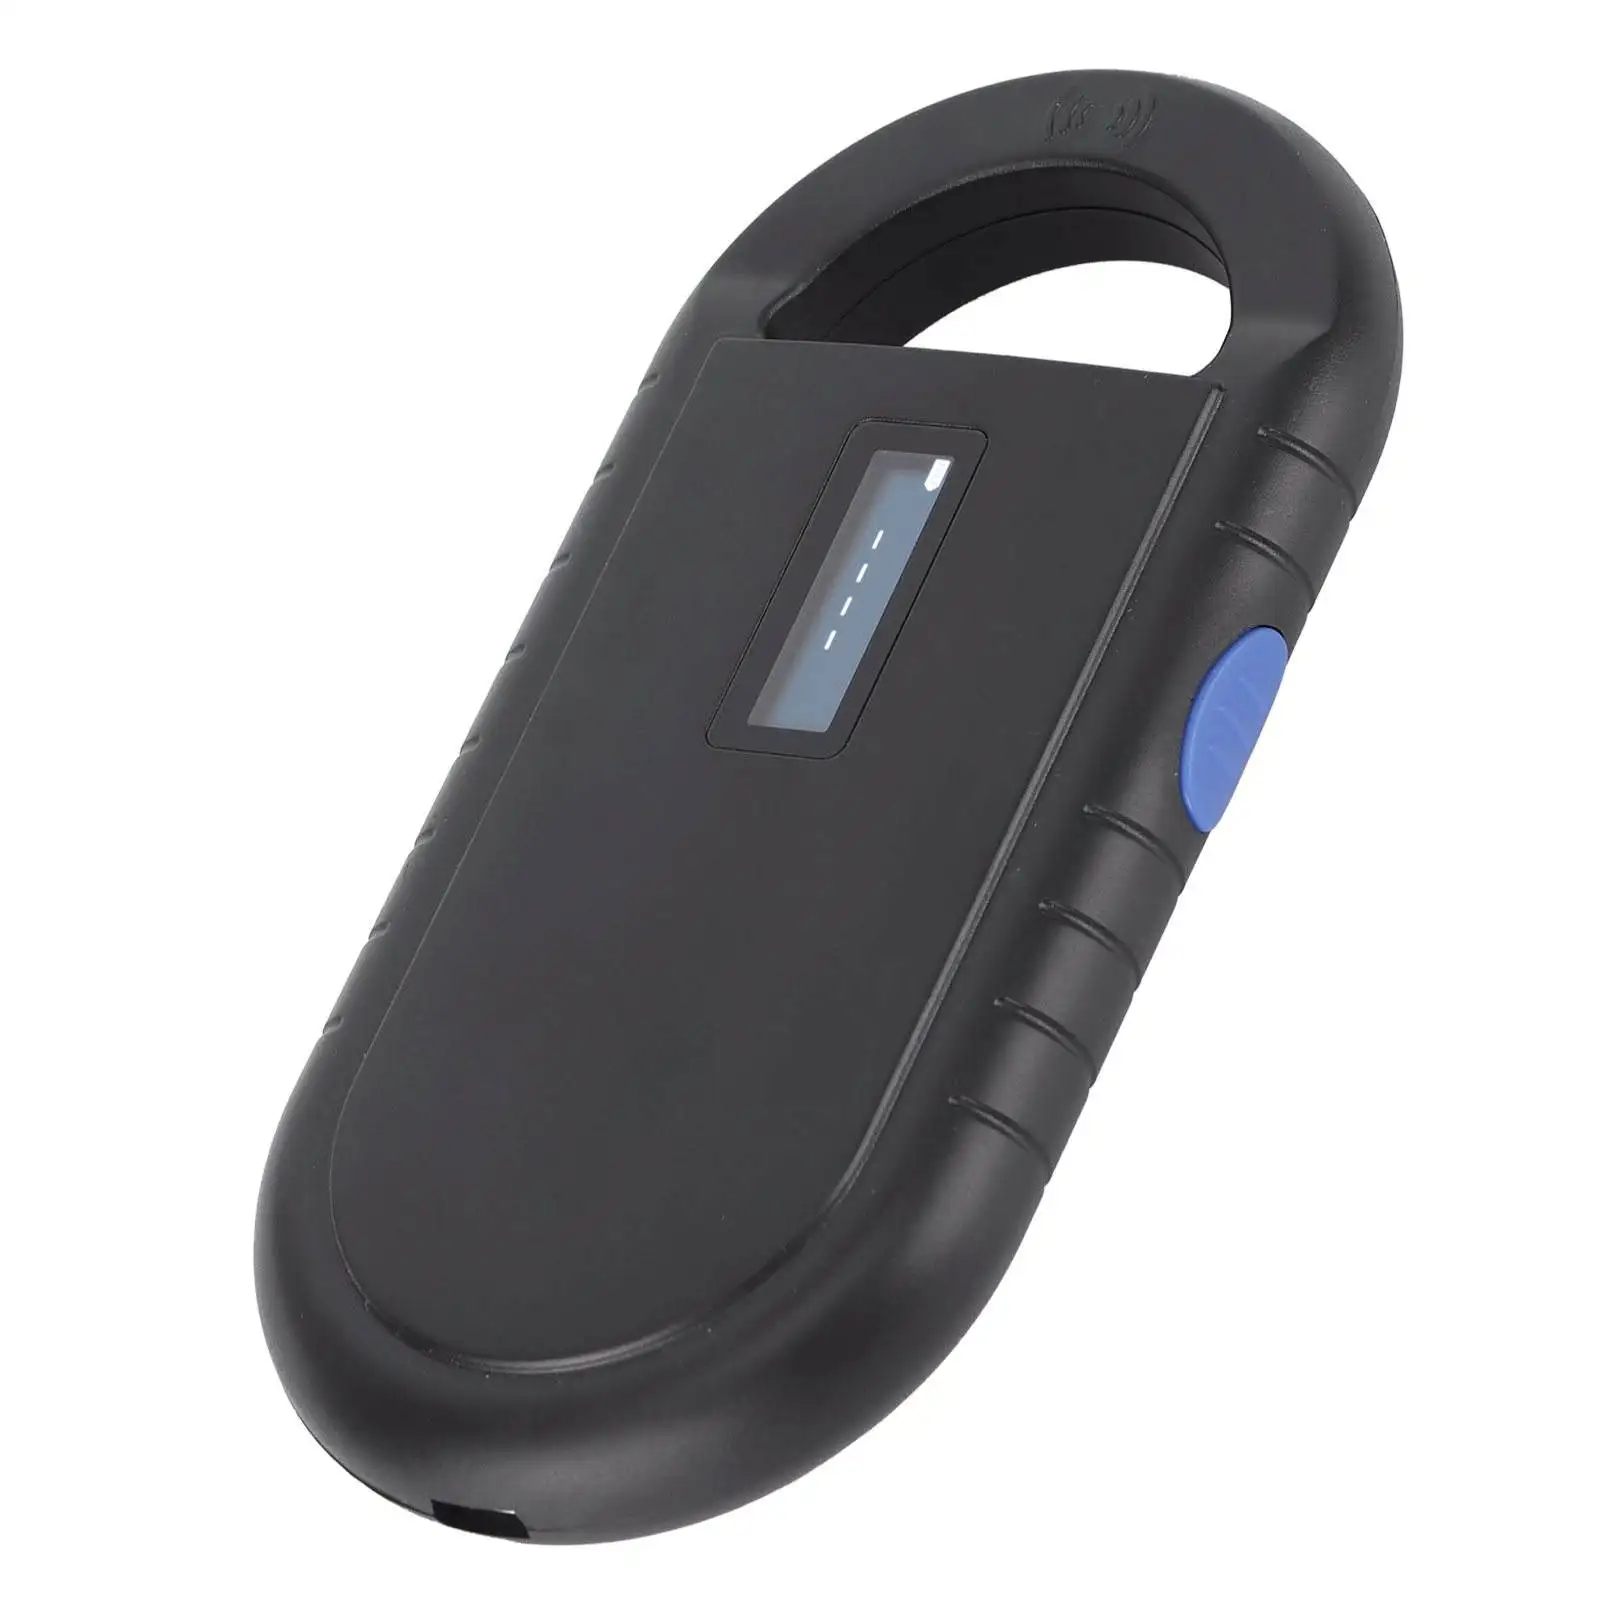 Pet ID Reader RFID Emid USB 134.2KHz Pet Tag Scanner for Dogs Tracking Identification